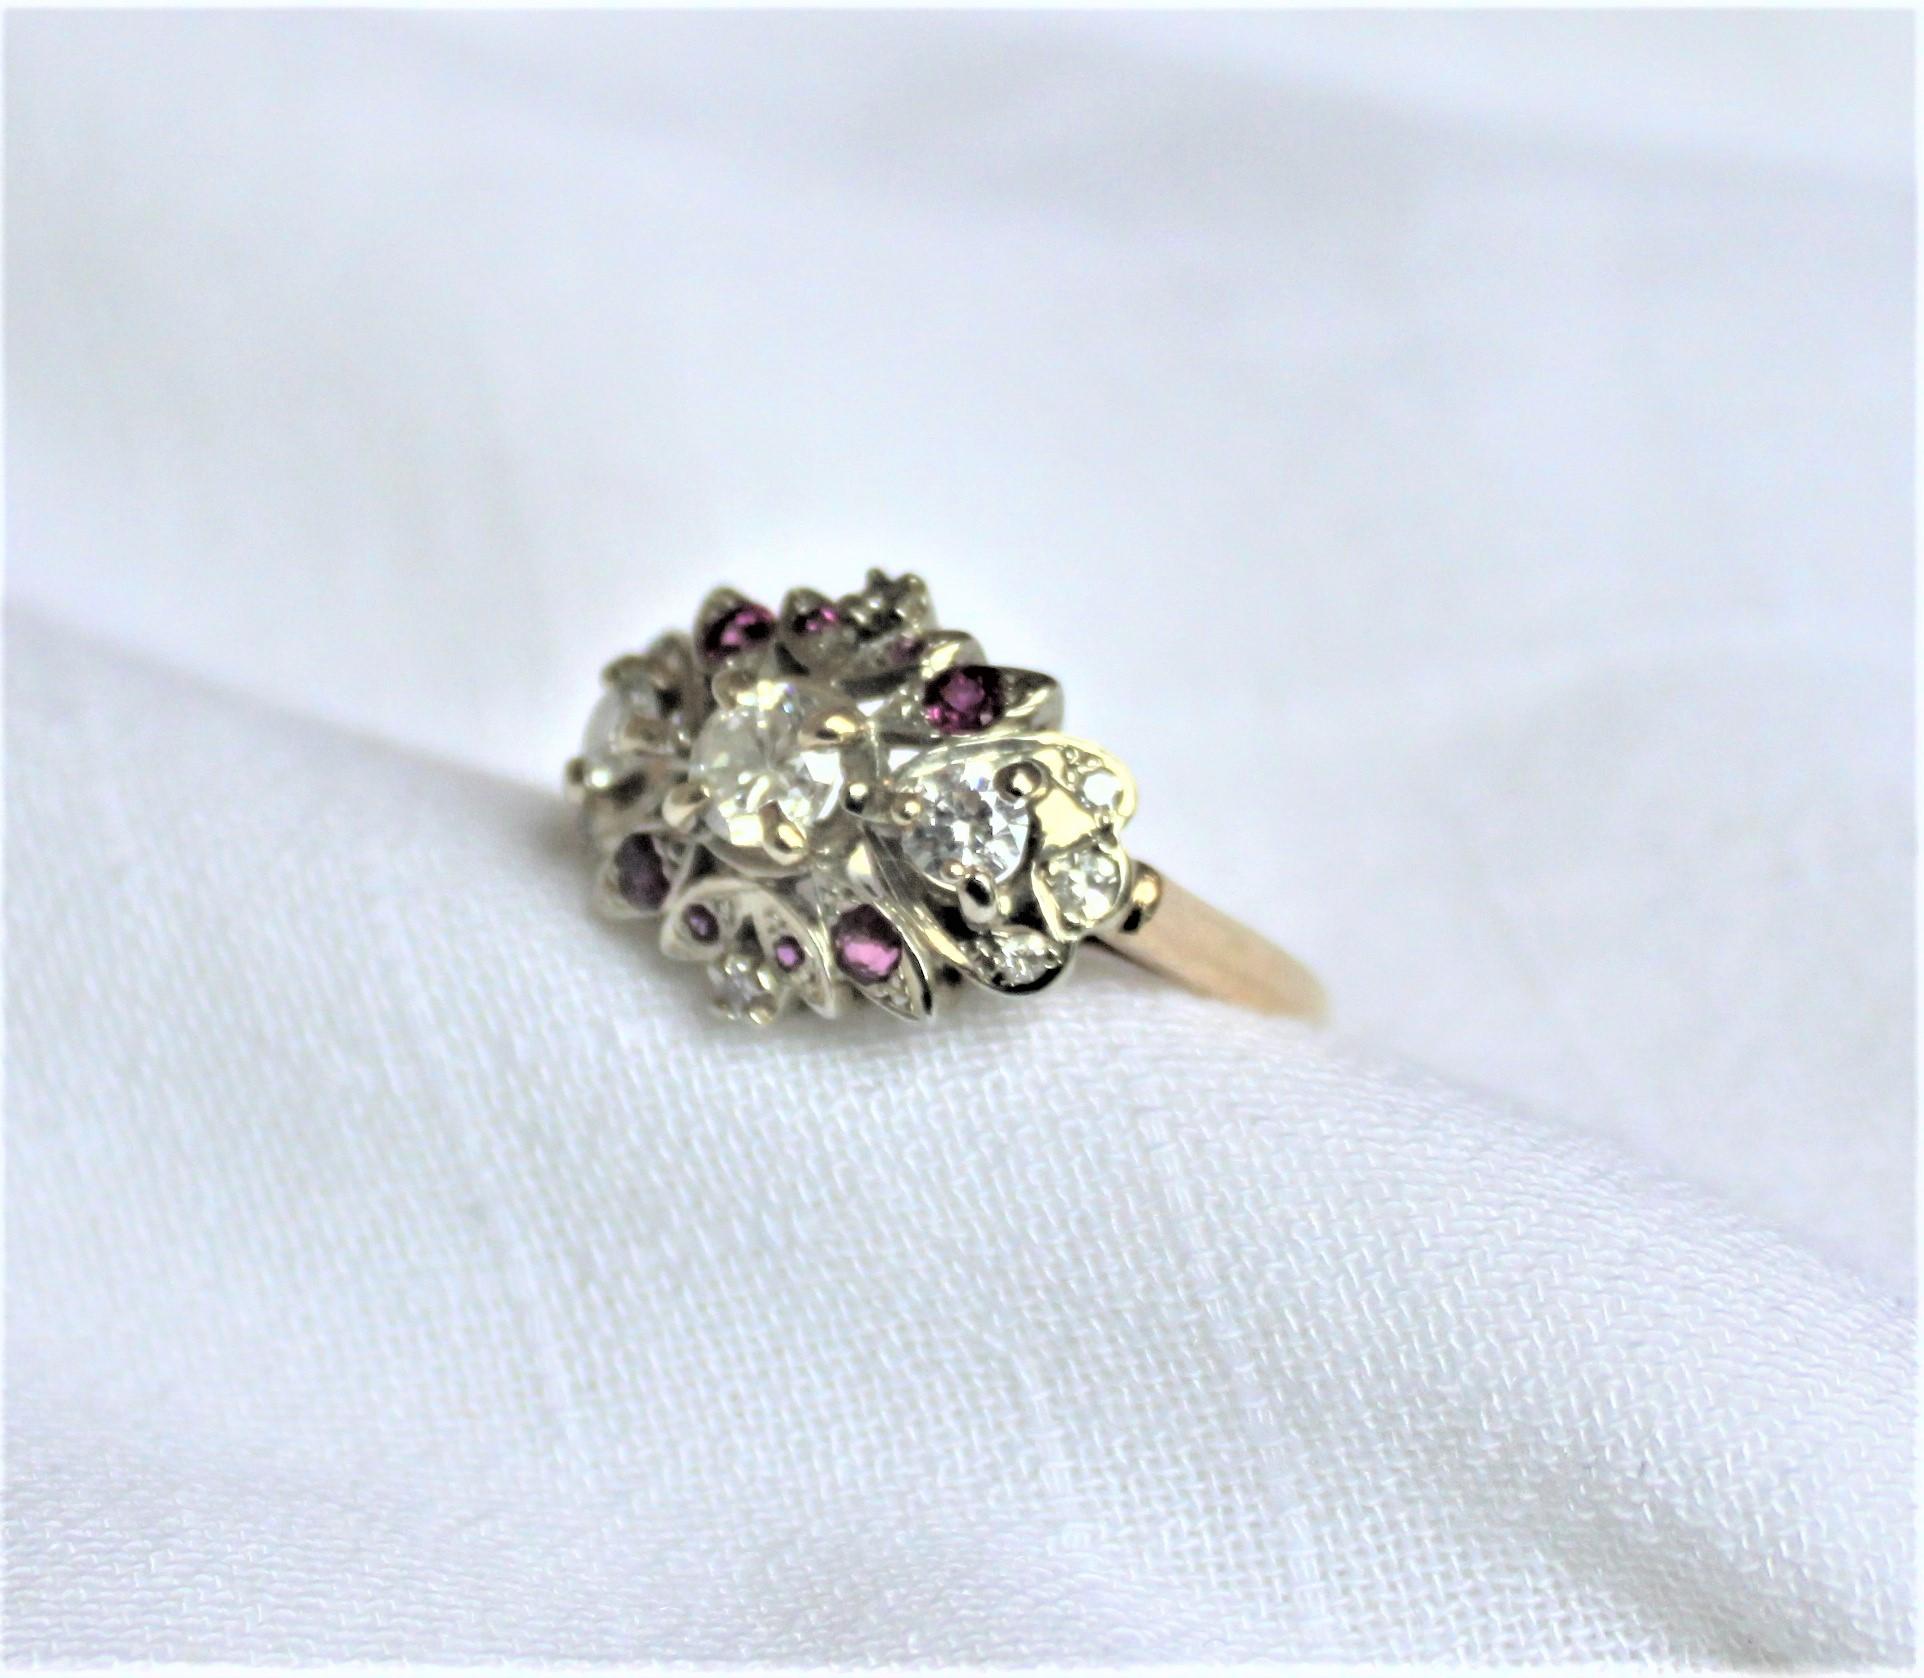 American Ladies Midcentury 14-Karat Yellow Gold Cluster Ring with Diamonds & Rubies